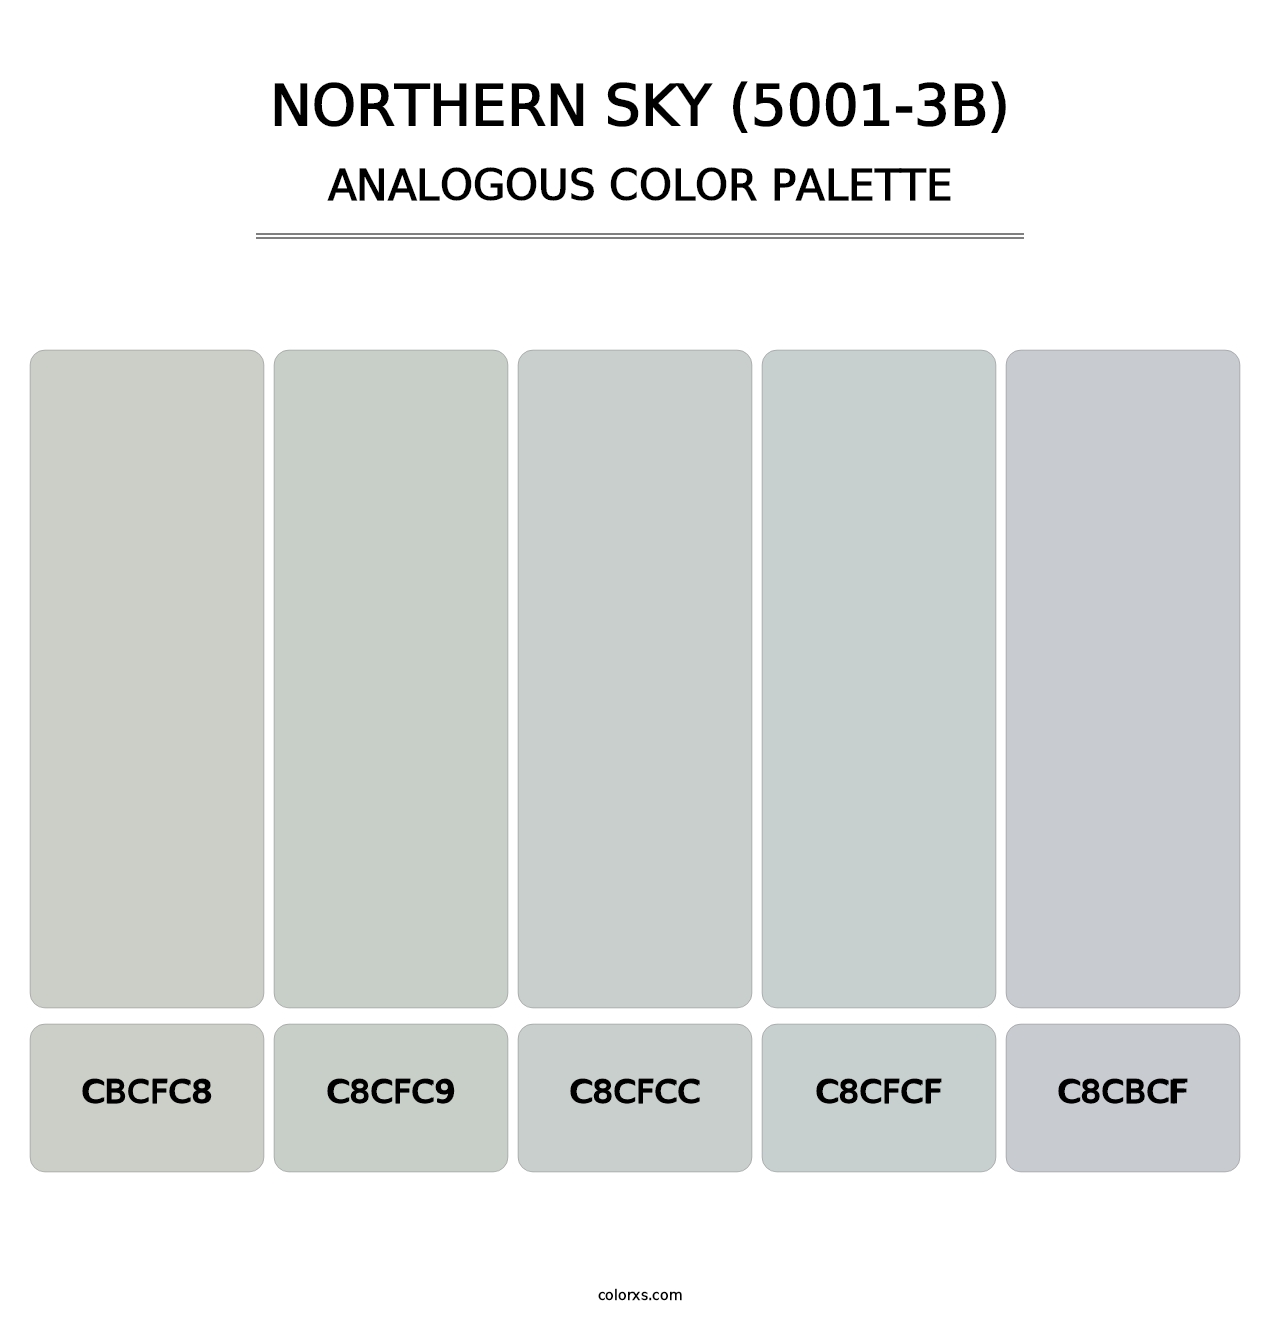 Northern Sky (5001-3B) - Analogous Color Palette